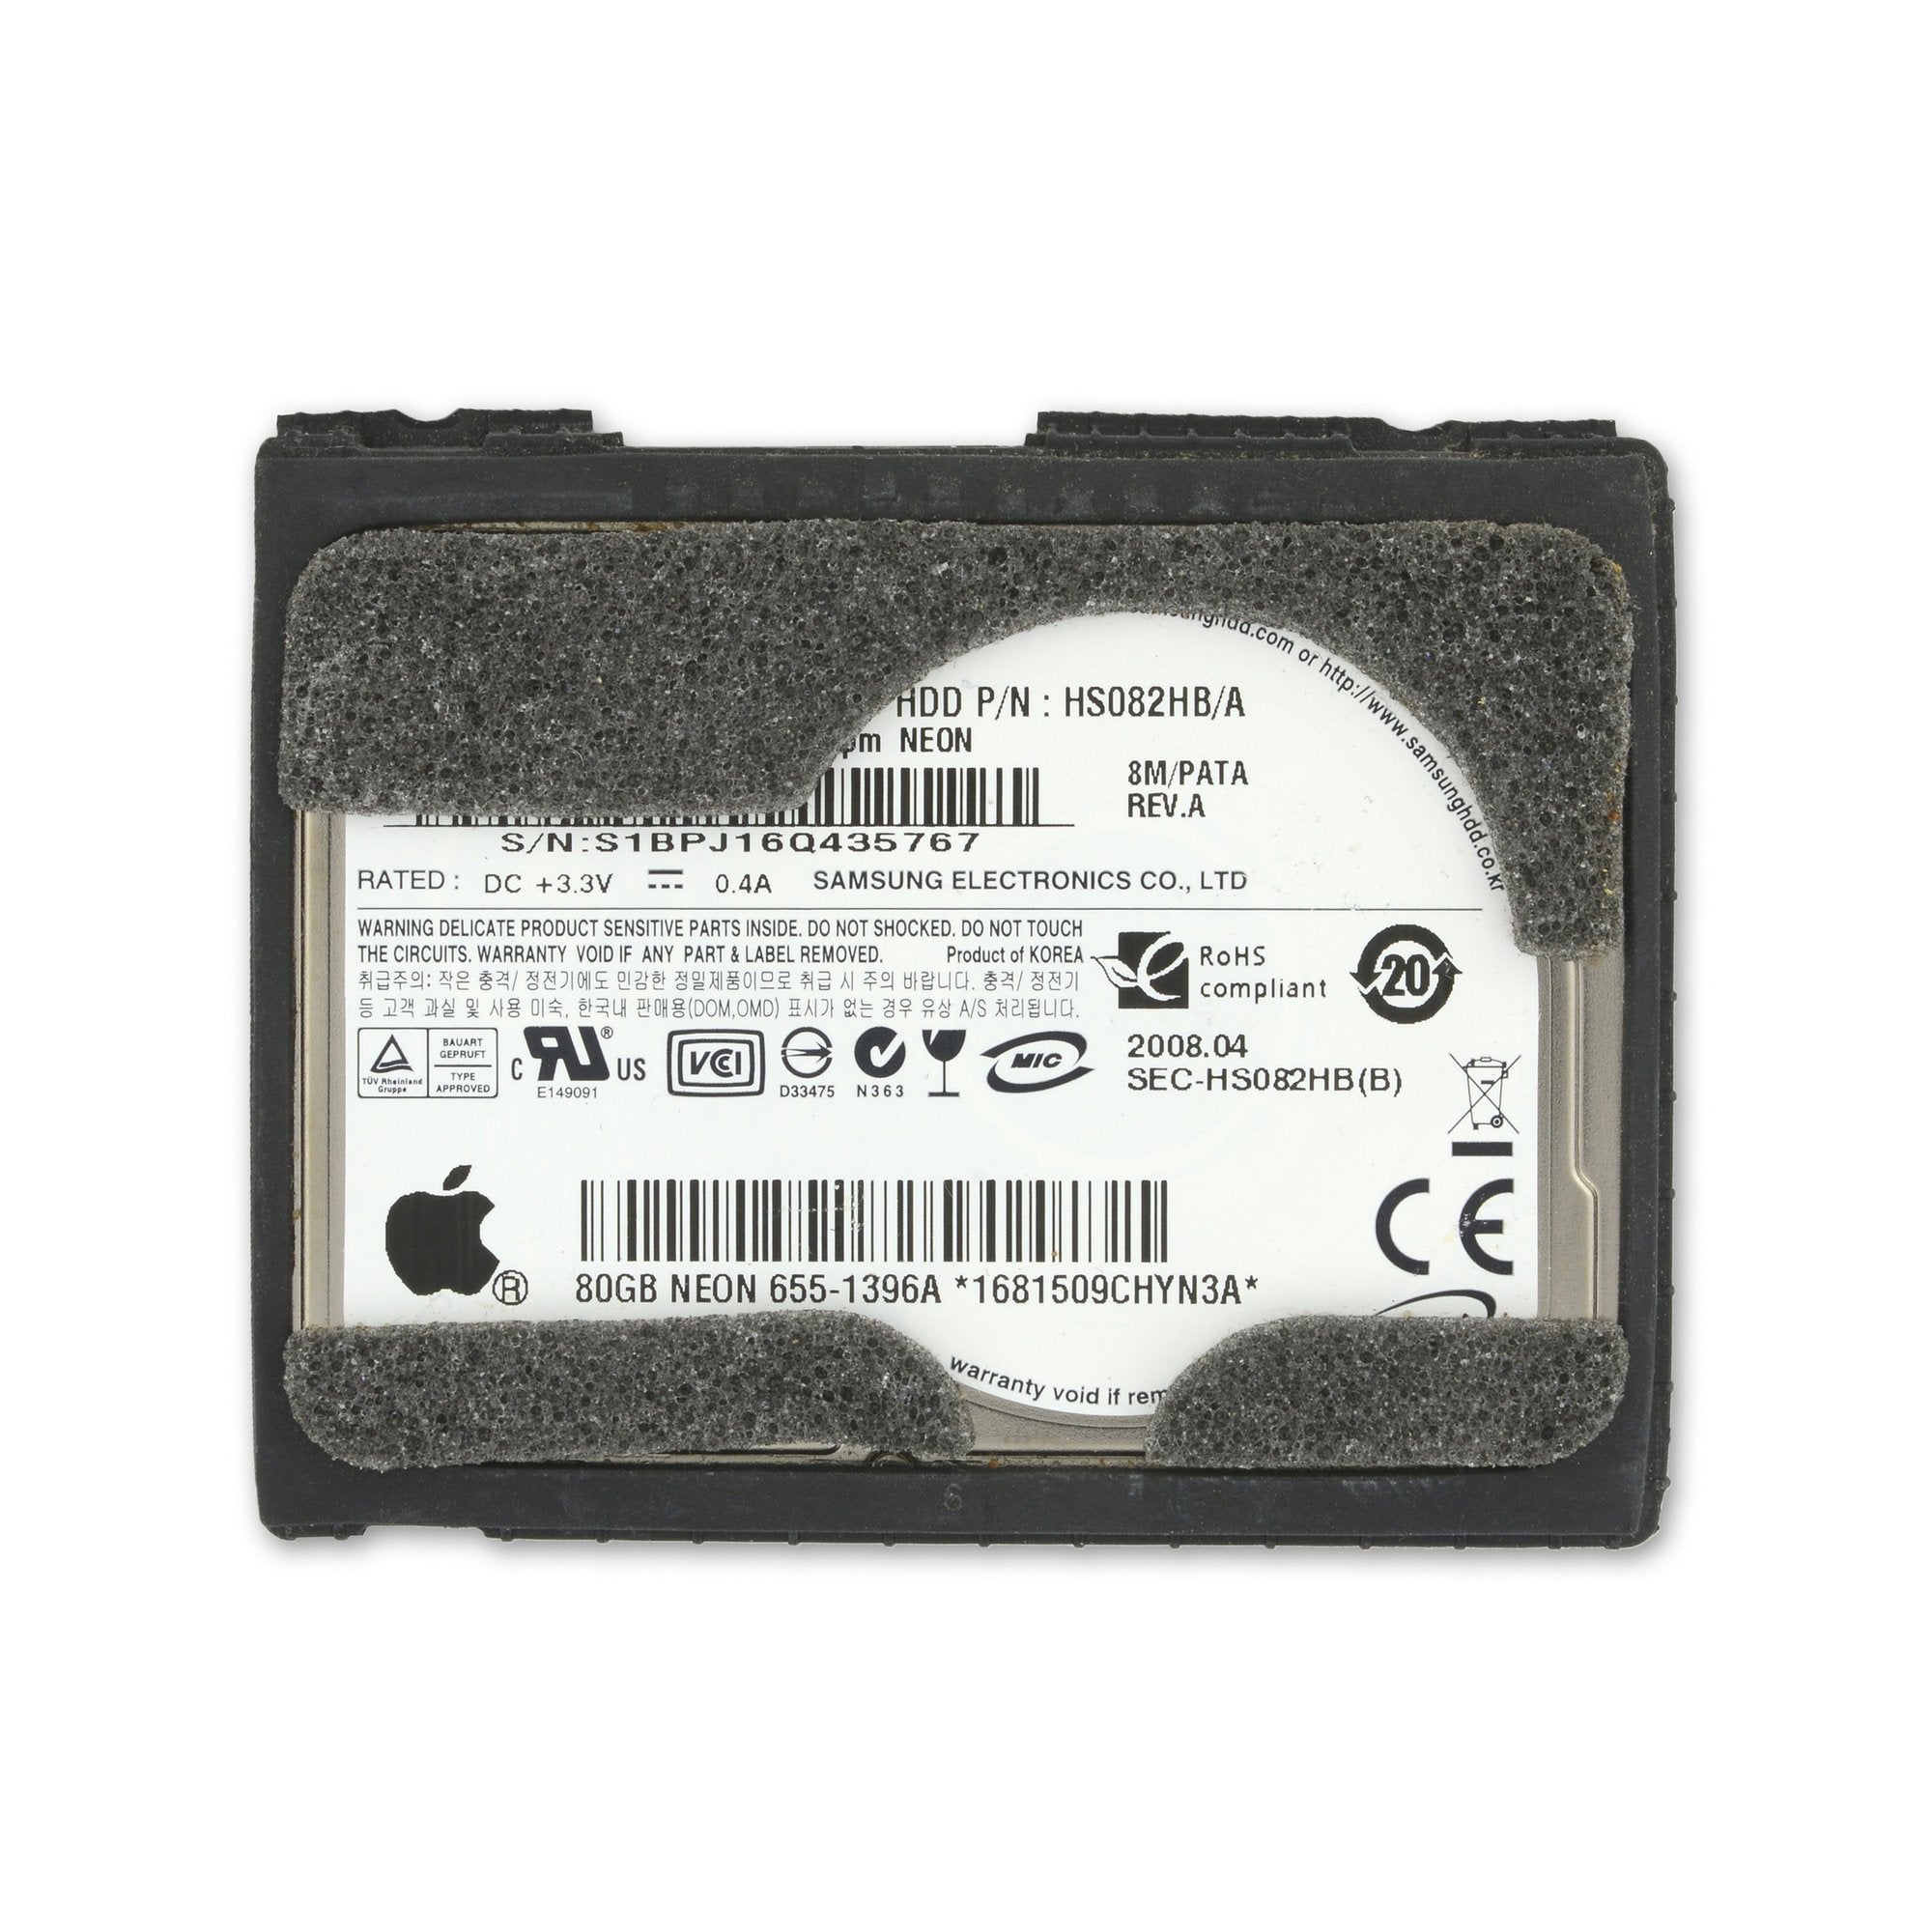 MacBook 80 GB Hard Drive